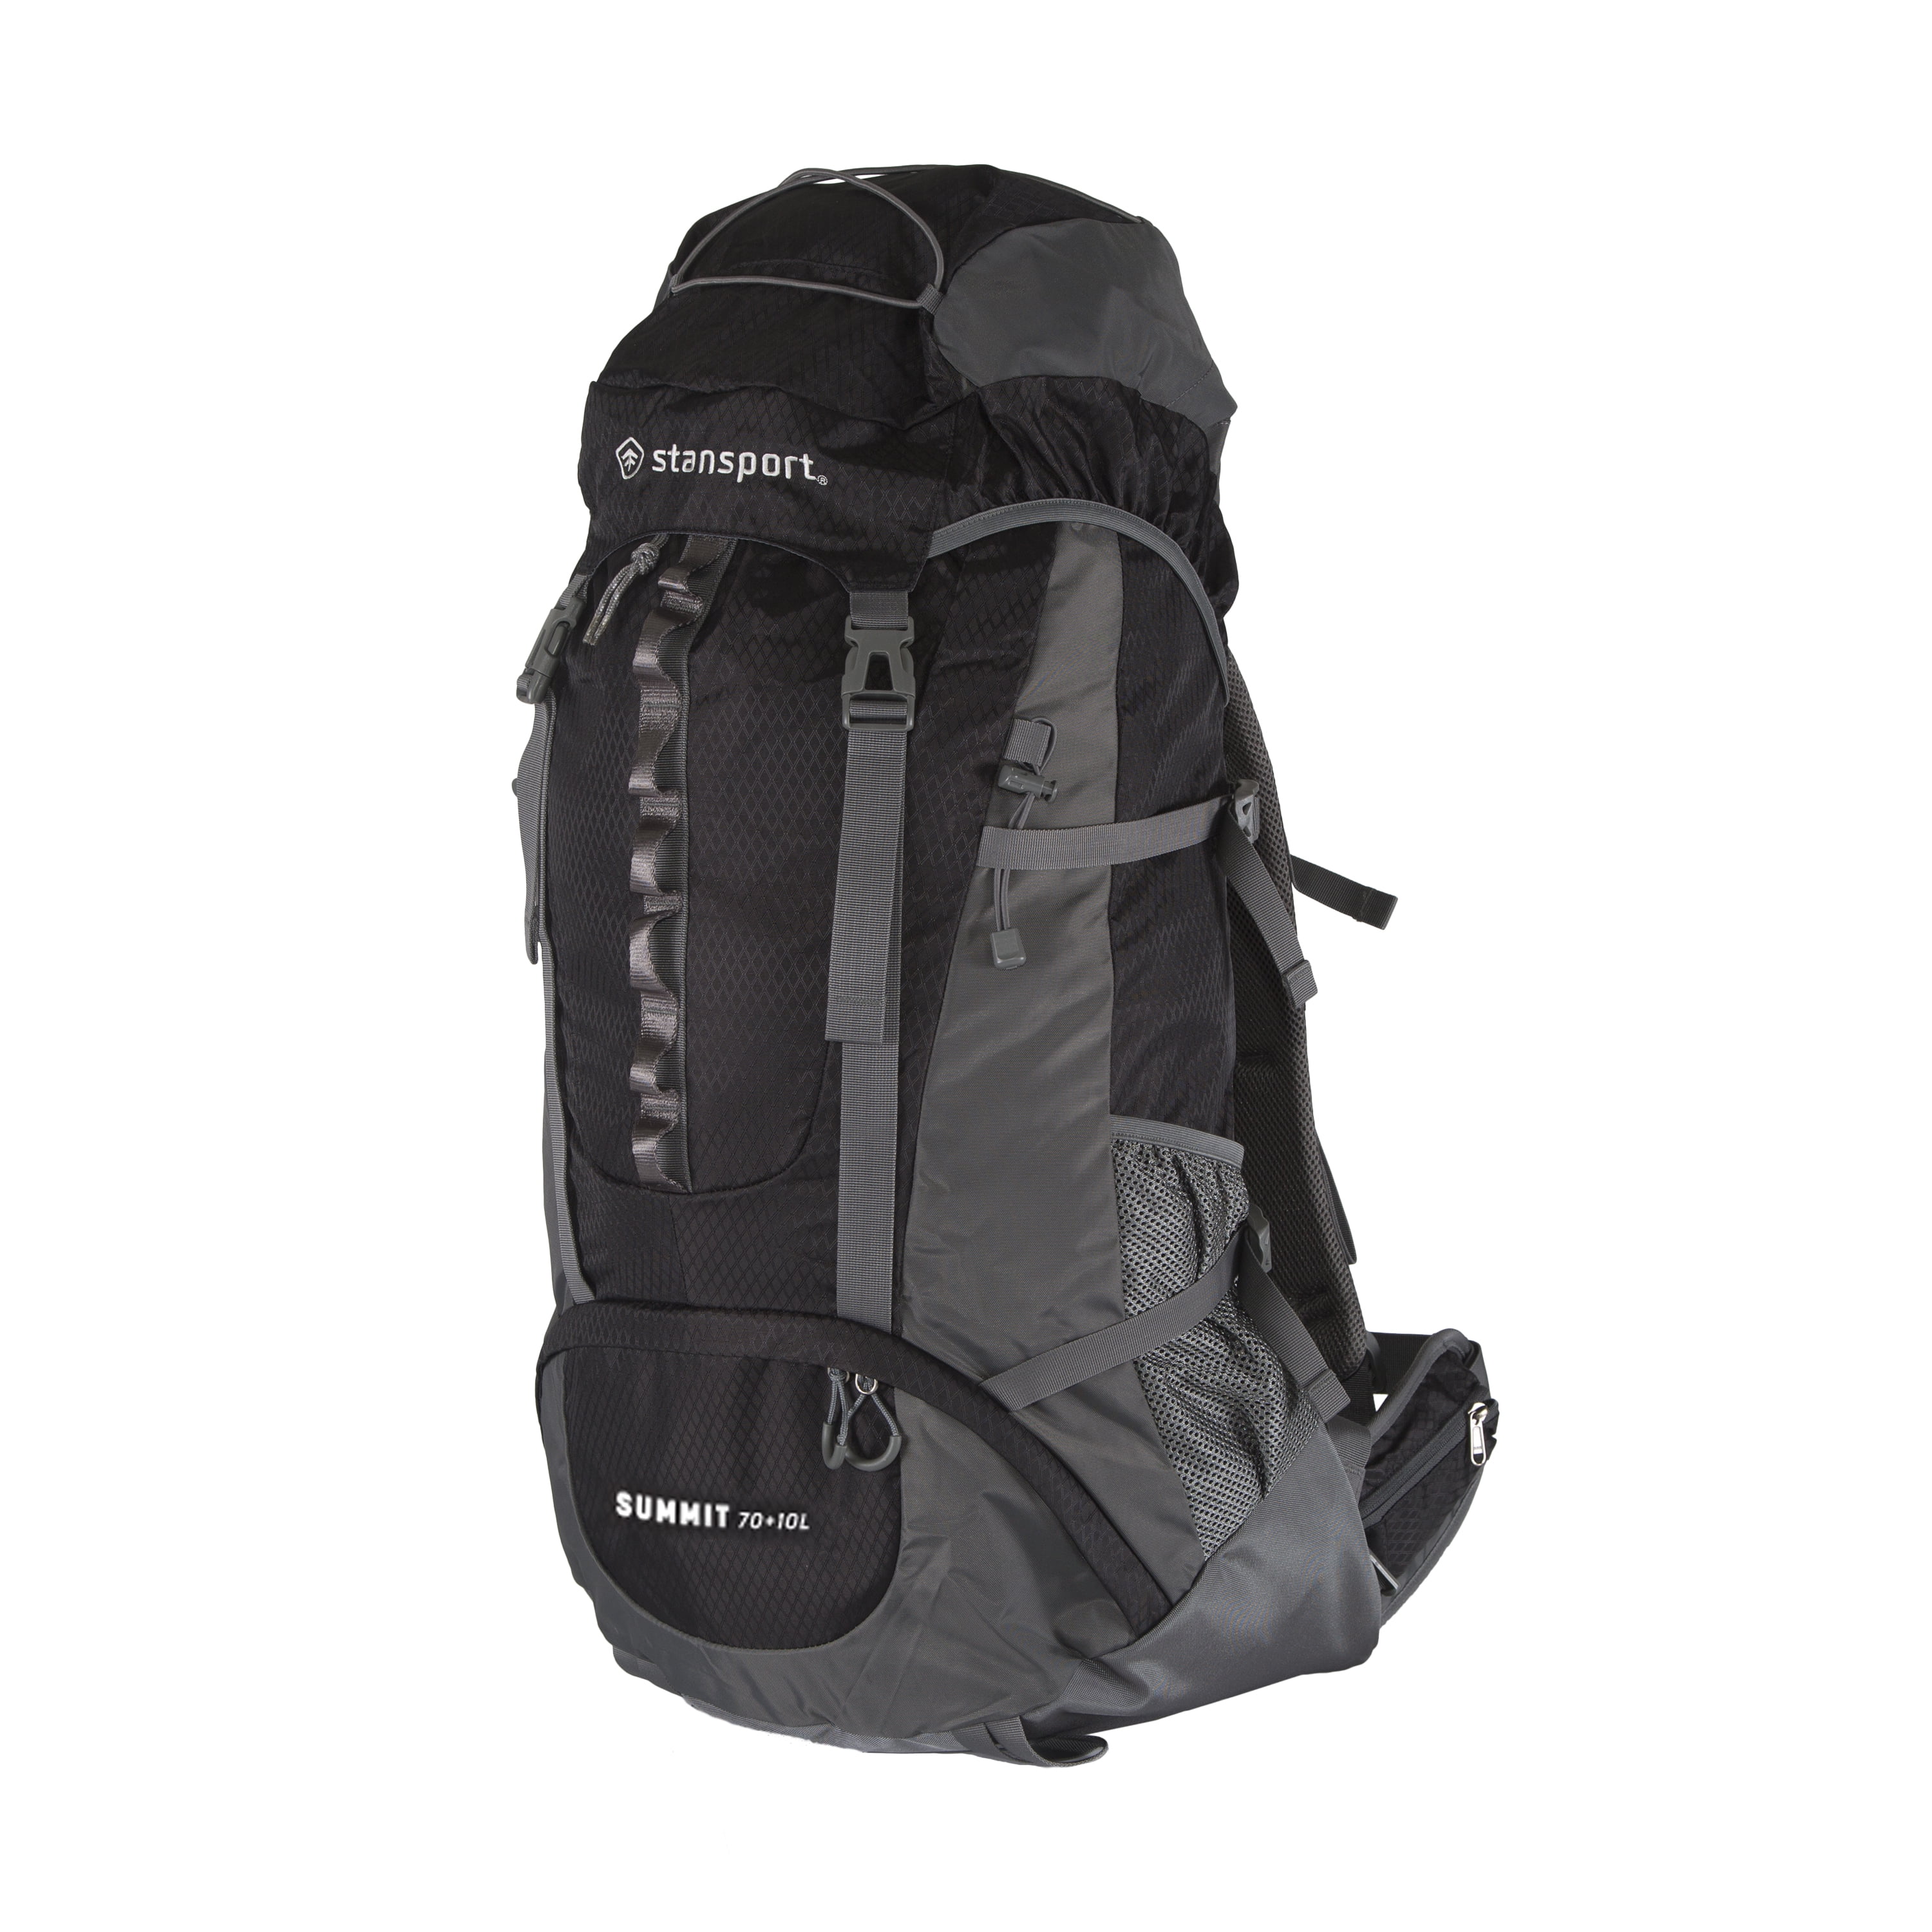 Stansport 70 ltr Backpacking Backpack, Black - 0002360e A496 4c64 8372 F3f77a315763 2.1b6fDca968e4783c0170608e8DD307D9